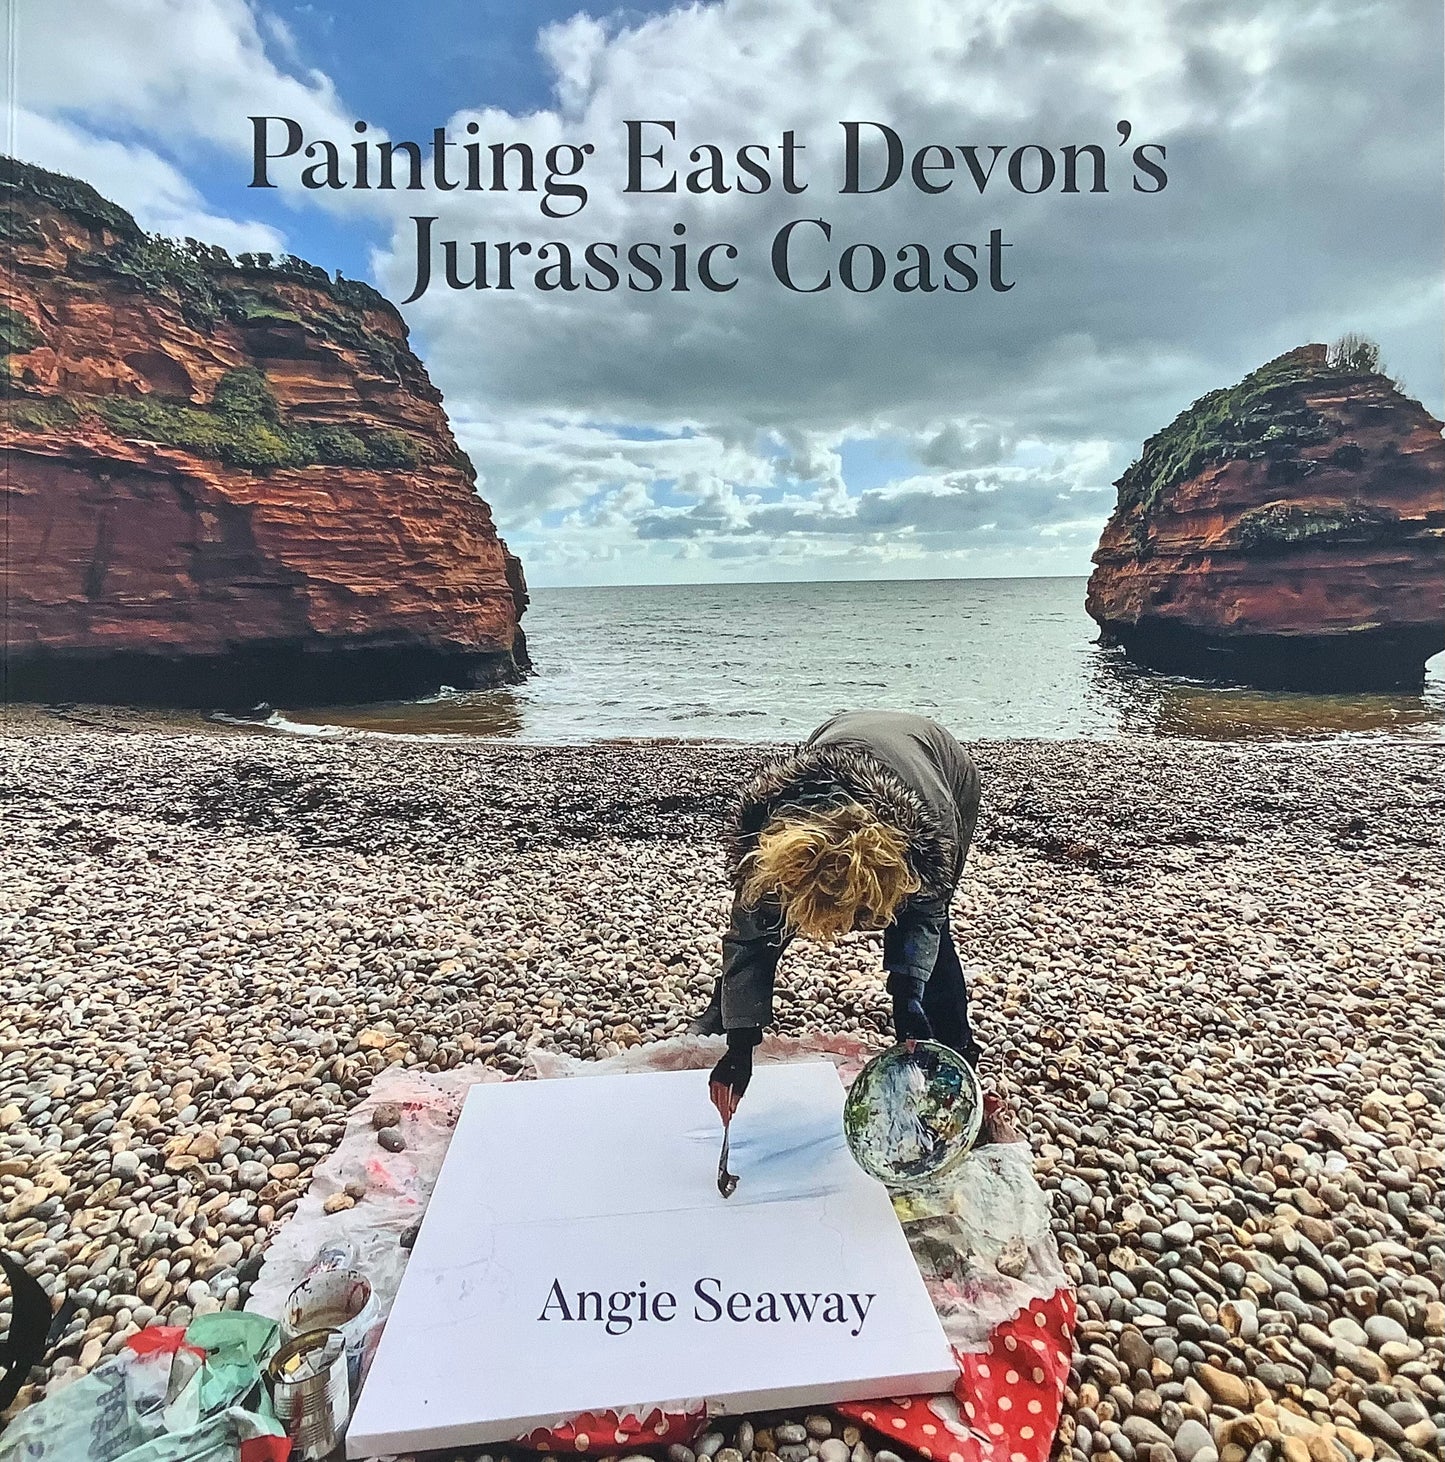 Painting East Devon's Jurassic Coast by Angie Seaway